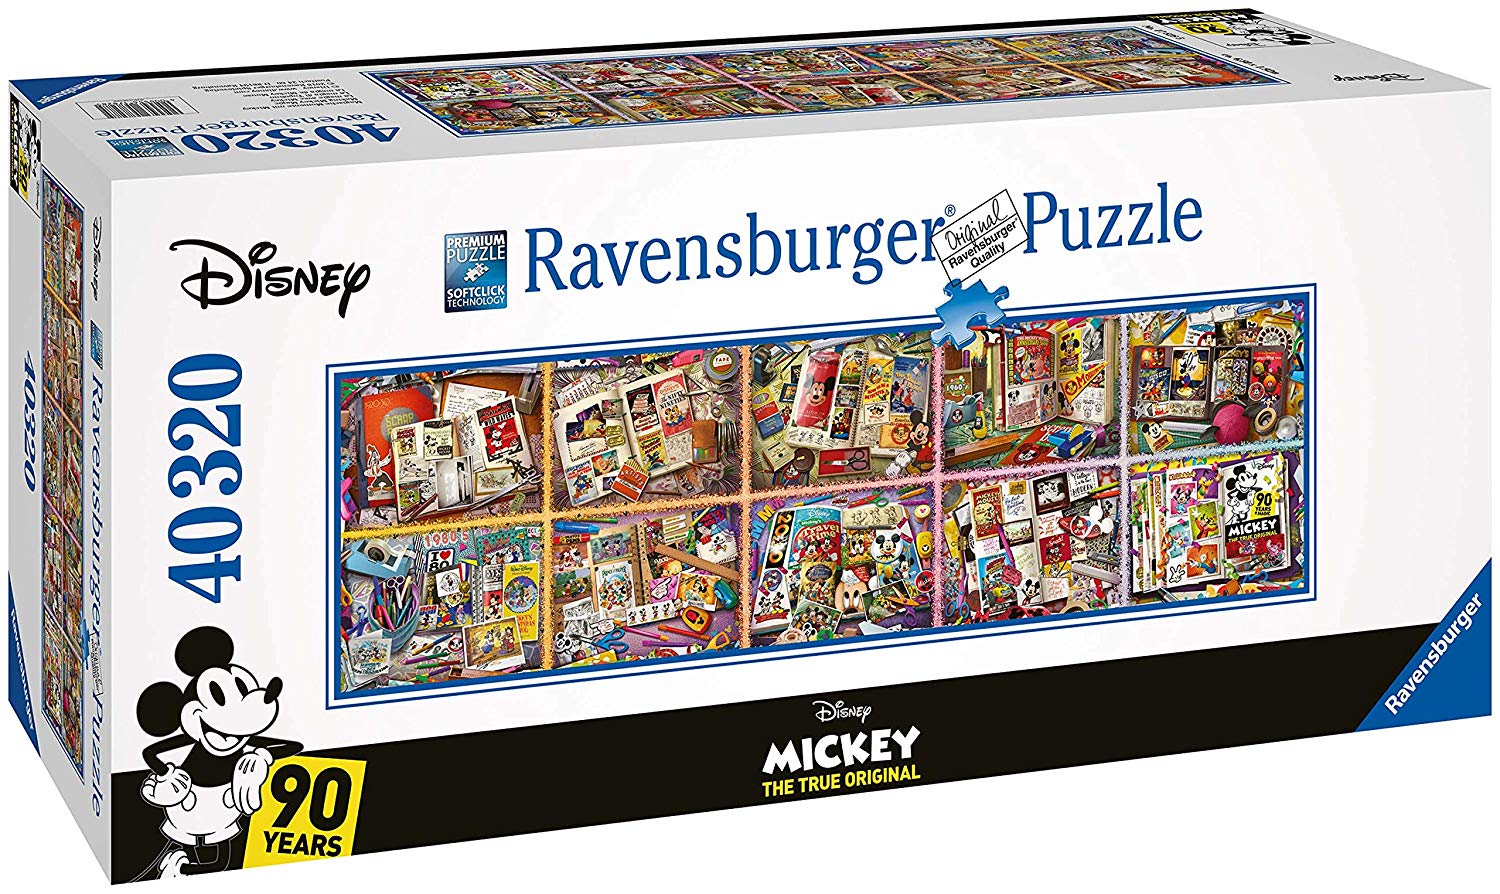 Ravensburger Adults Puzzle 17828 Mickeys 90Th Birthday 40,000 Piece Jigsaw